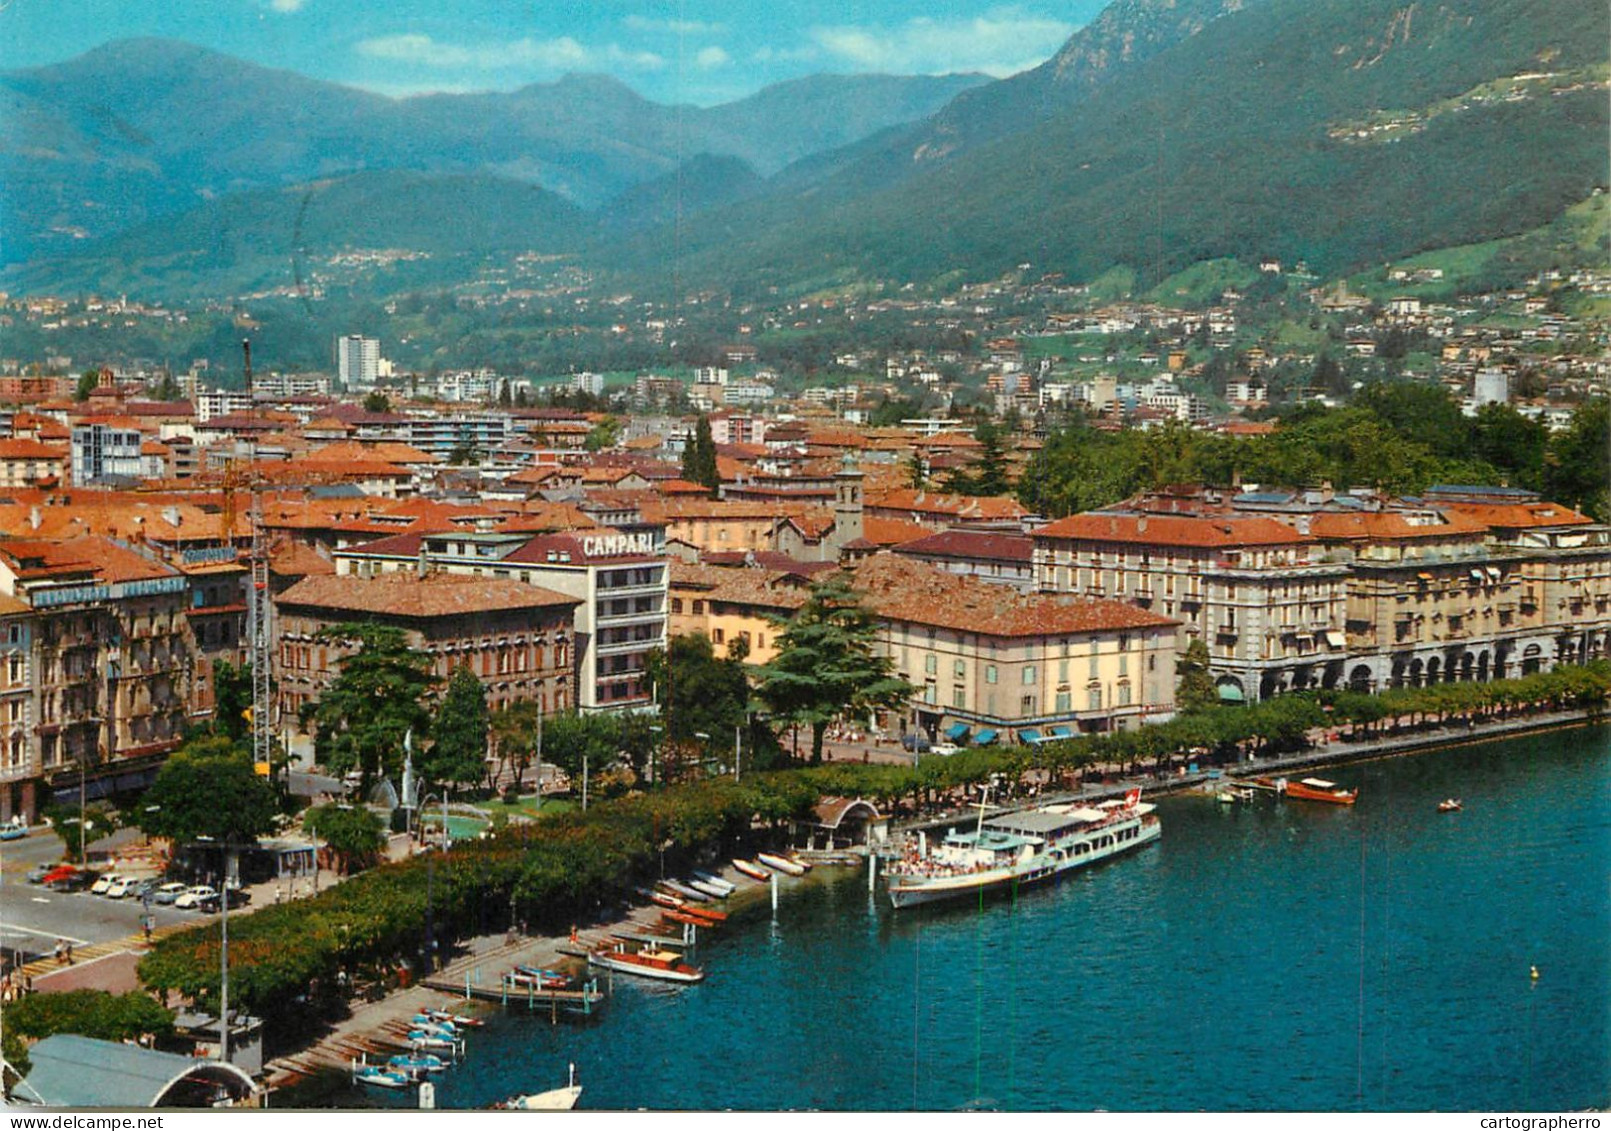 Navigation Sailing Vessels & Boats Themed Postcard Lugano Pleasure Cruise - Sailing Vessels